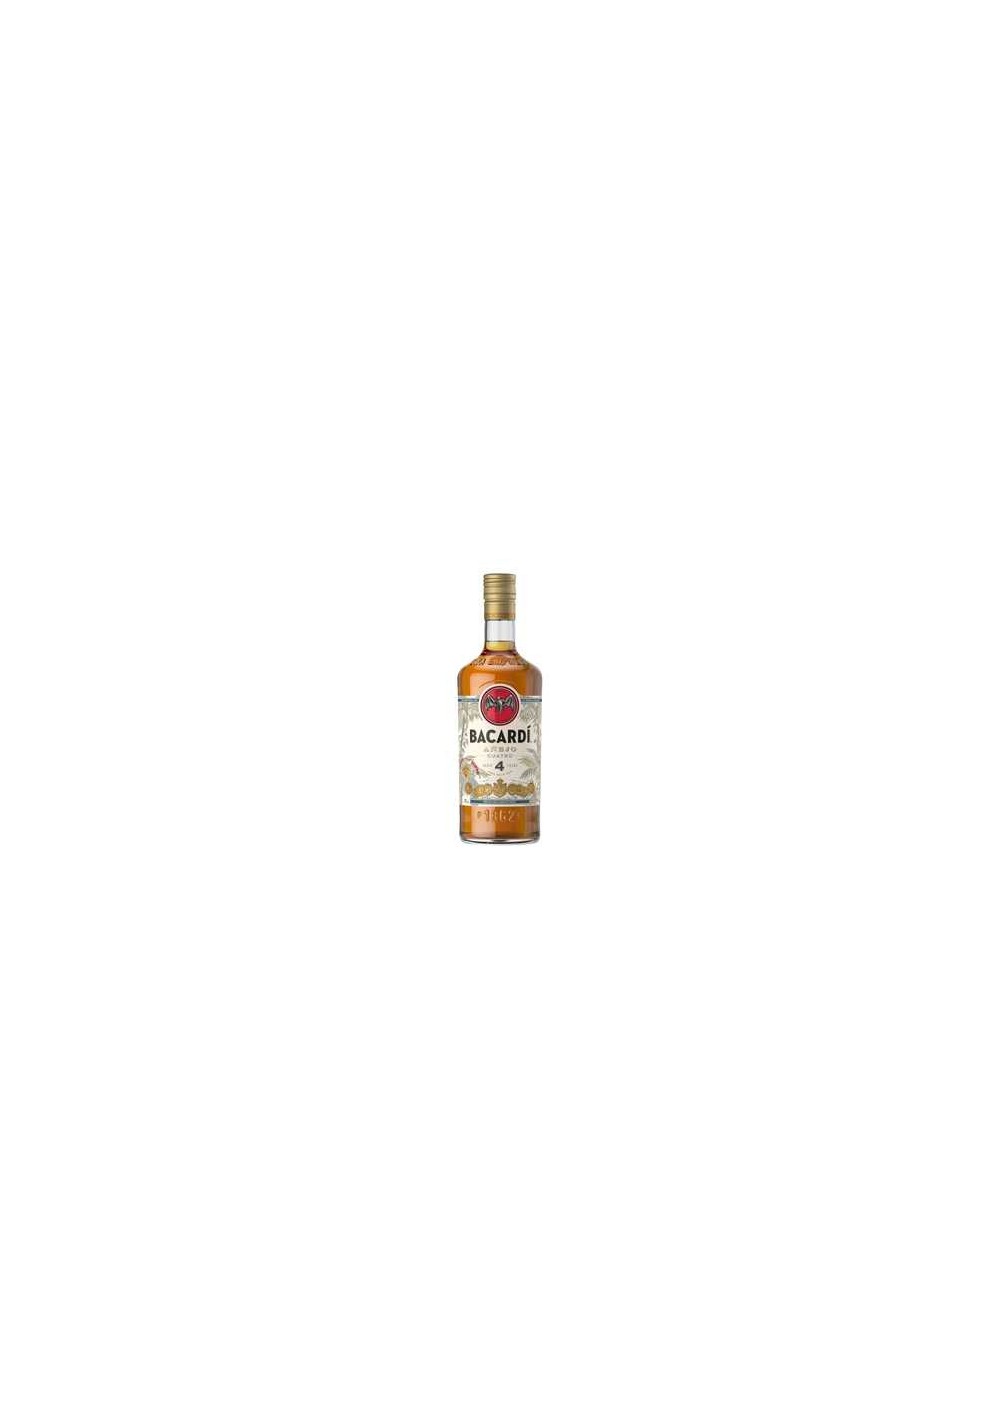 Bacardi - Anejo Cuatro - 4 years old - Rum - (1 liter)